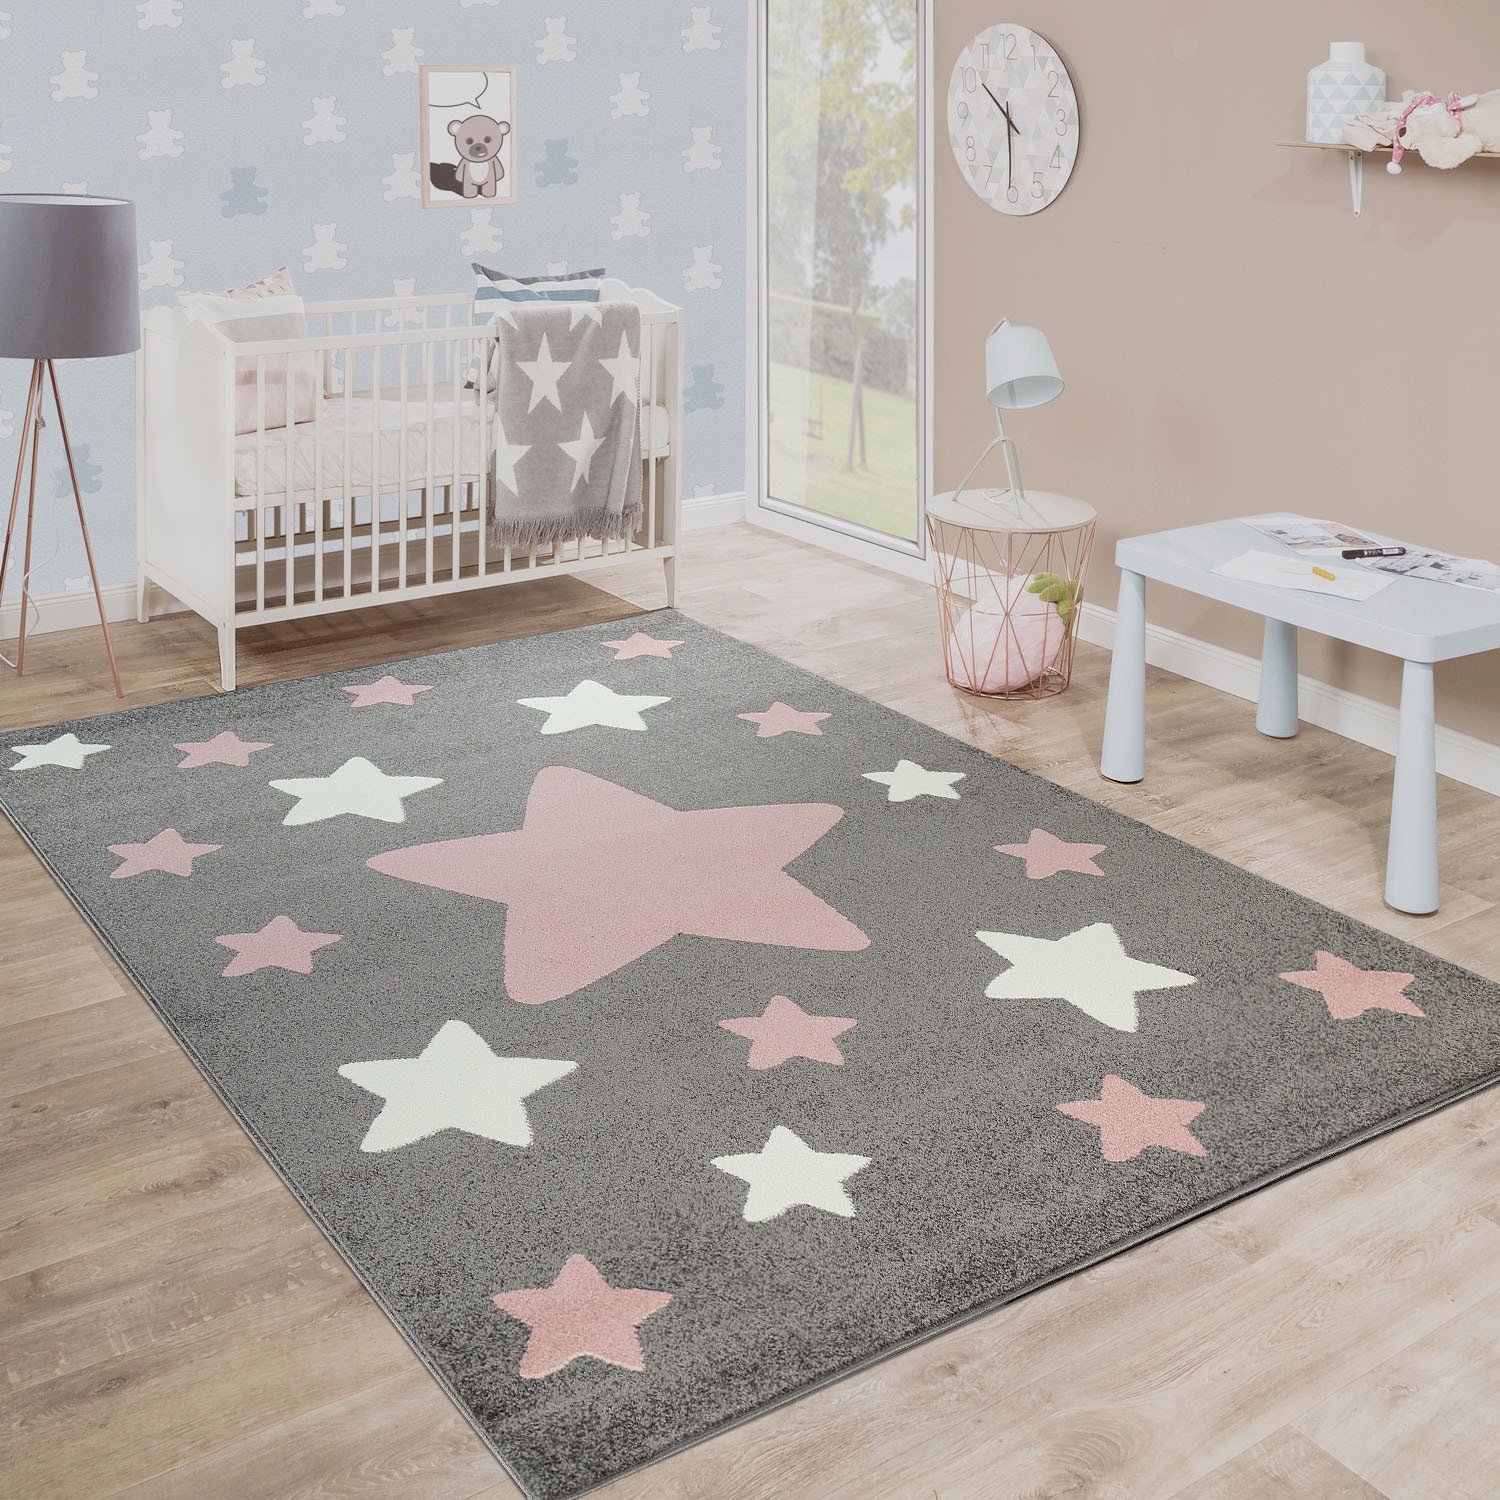 Paco Home Kinderteppich »Capri 330«, rechteckig, Kurzflor, Motiv Sterne, Pastell-Farben, Kinderzimmer